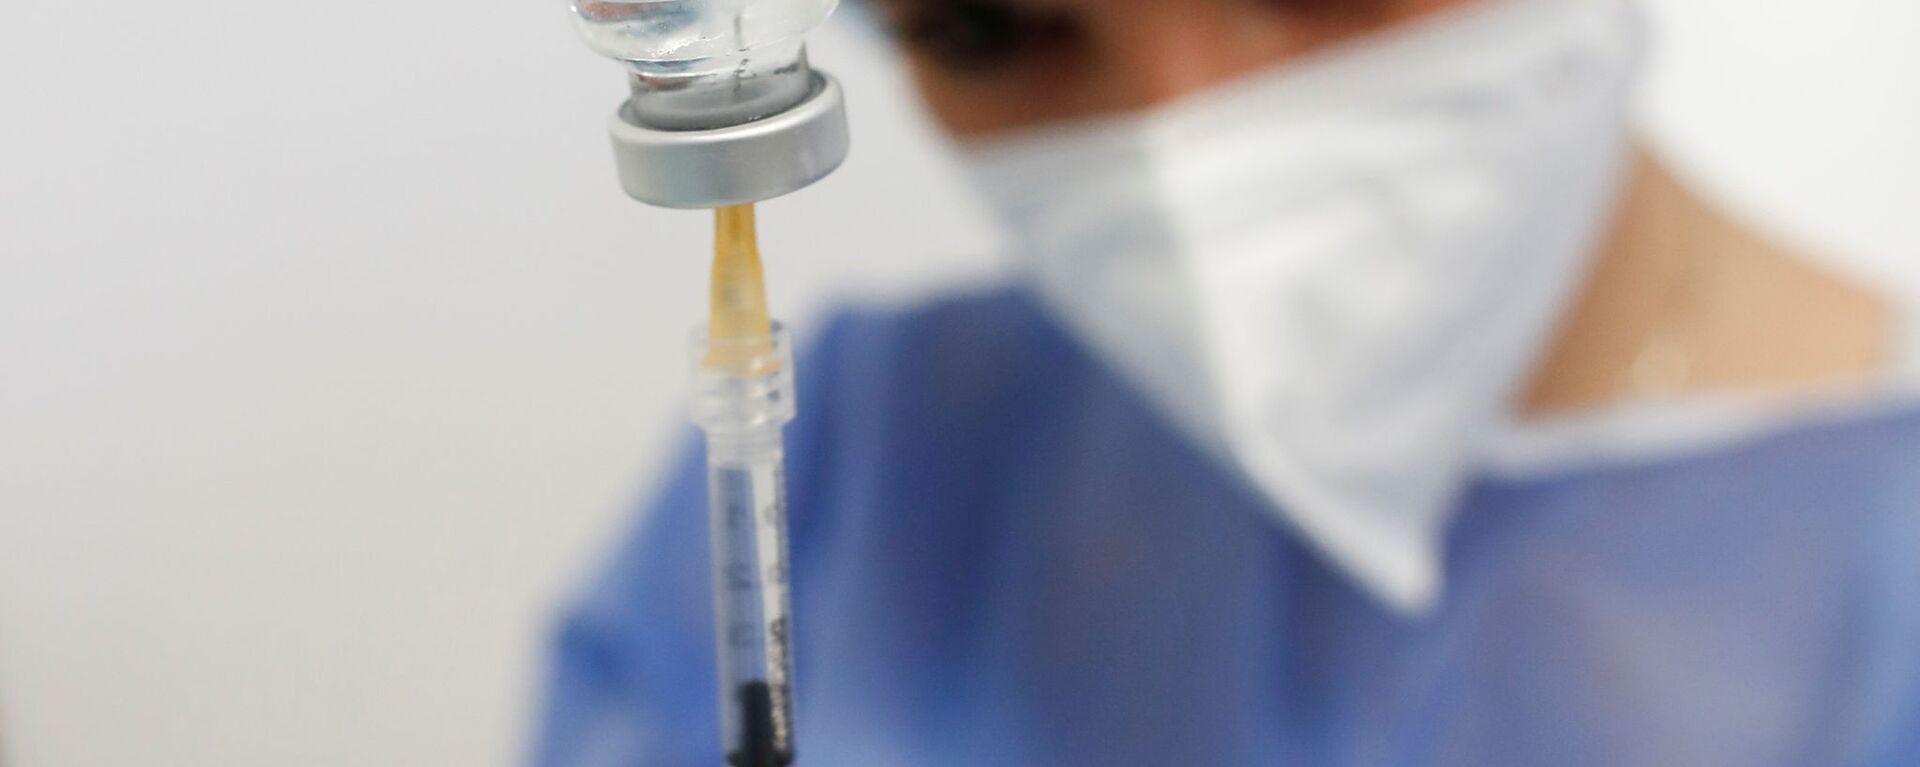  A nurse prepares to use AstraZeneca coronavirus disease (COVID-19) vaccine - Sputnik International, 1920, 05.09.2021